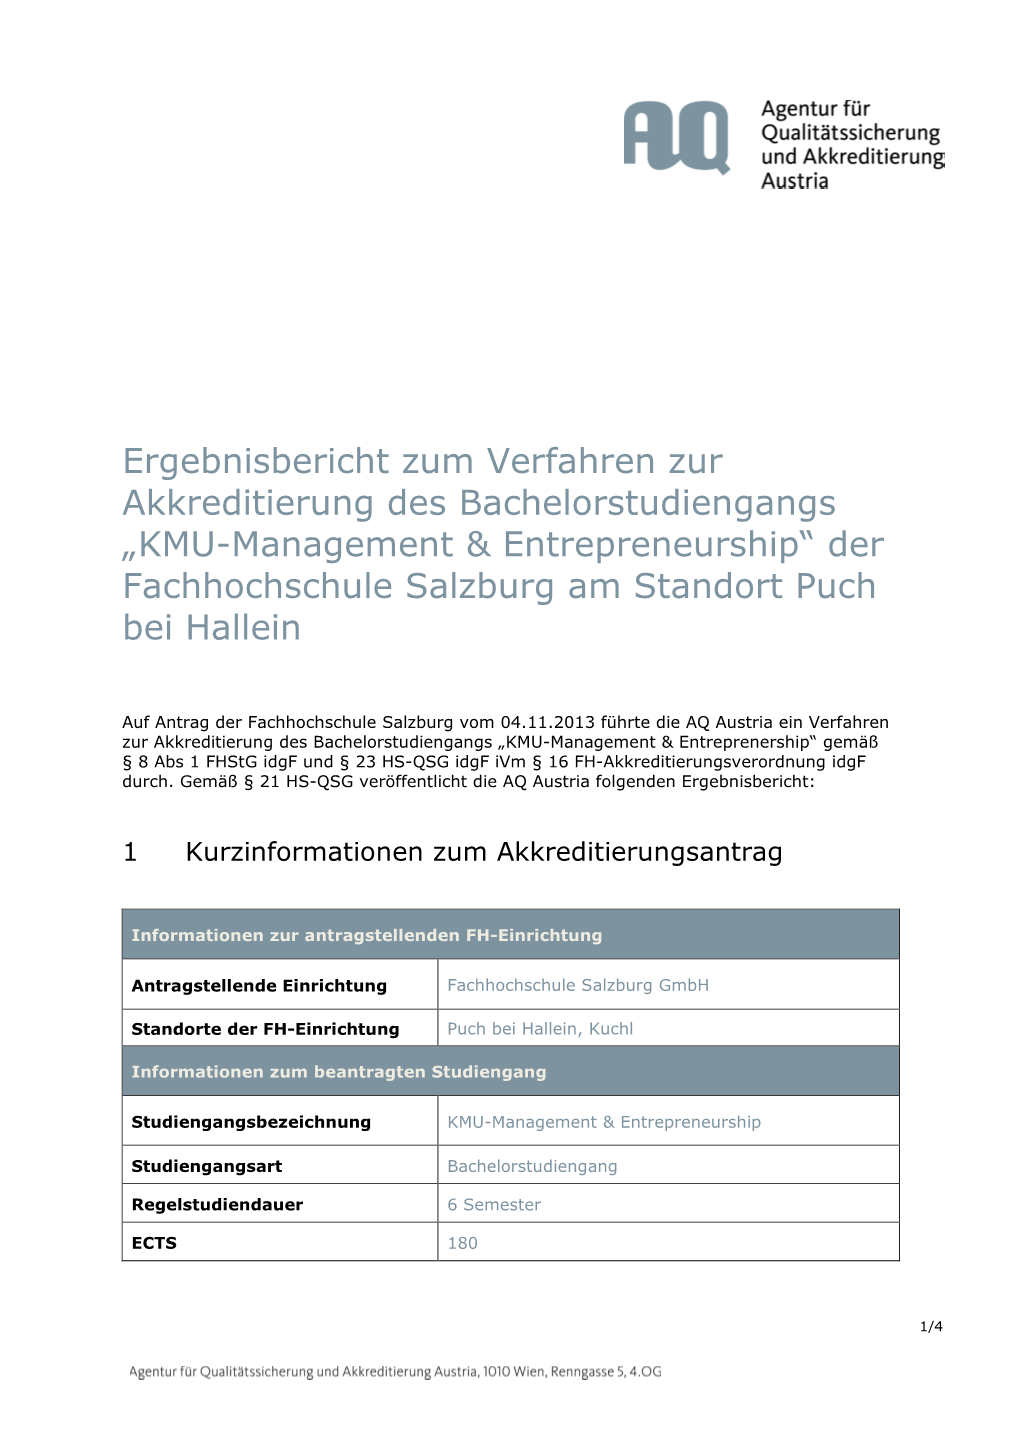 KMU-Management & Entrepreneurship